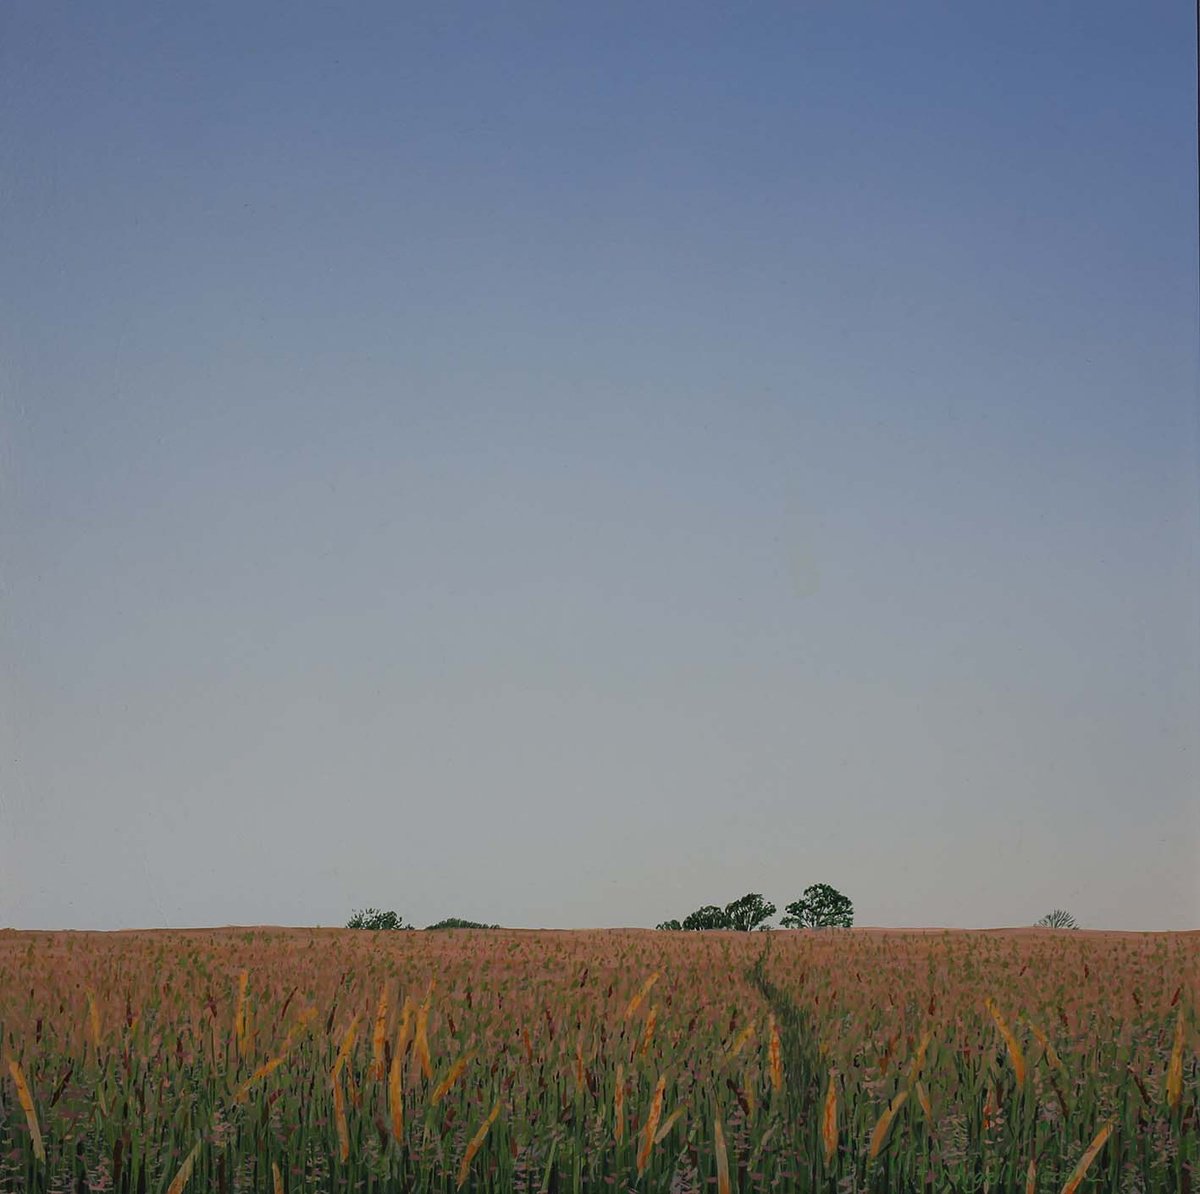 Grass Bank by Nigel Wood